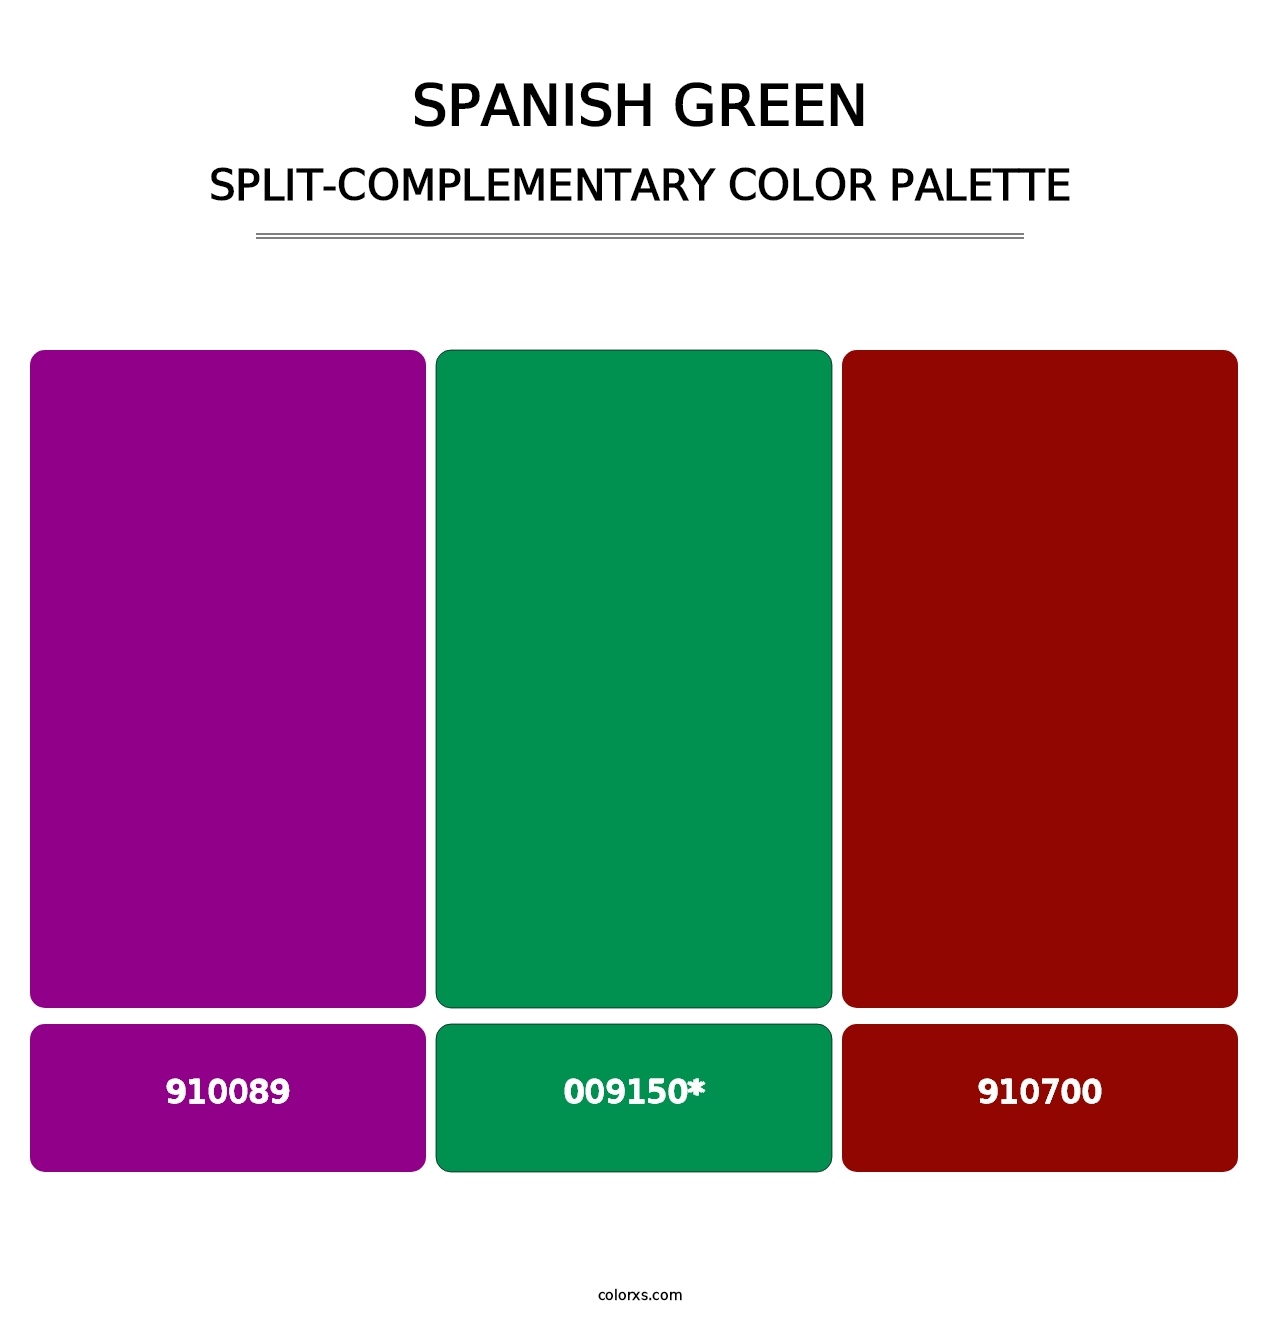 Spanish Green - Split-Complementary Color Palette